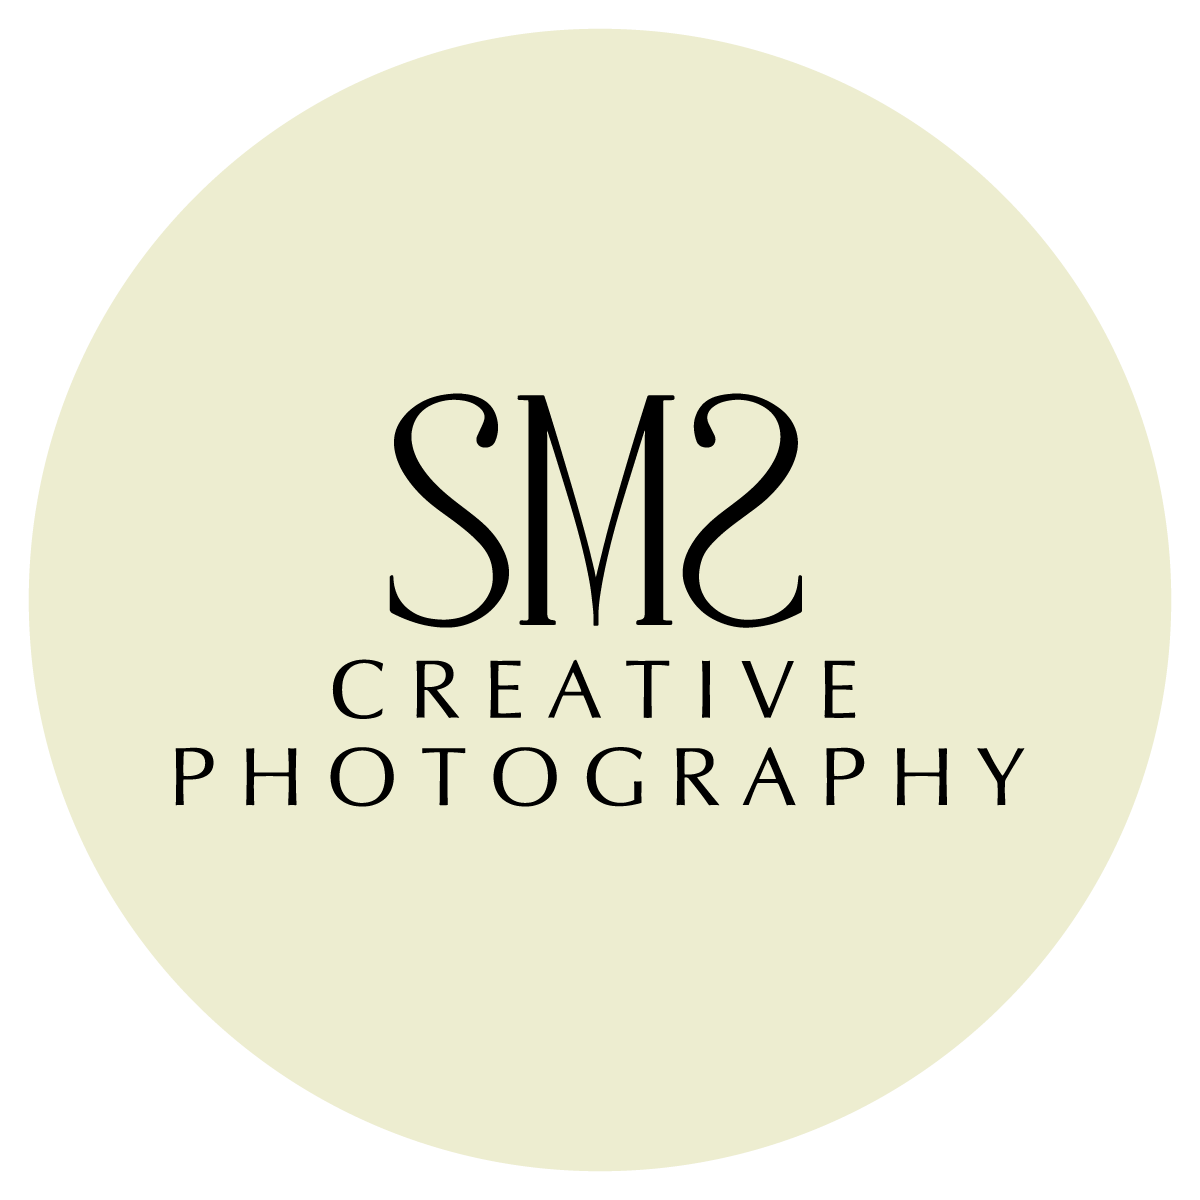 SMS Creative Photography